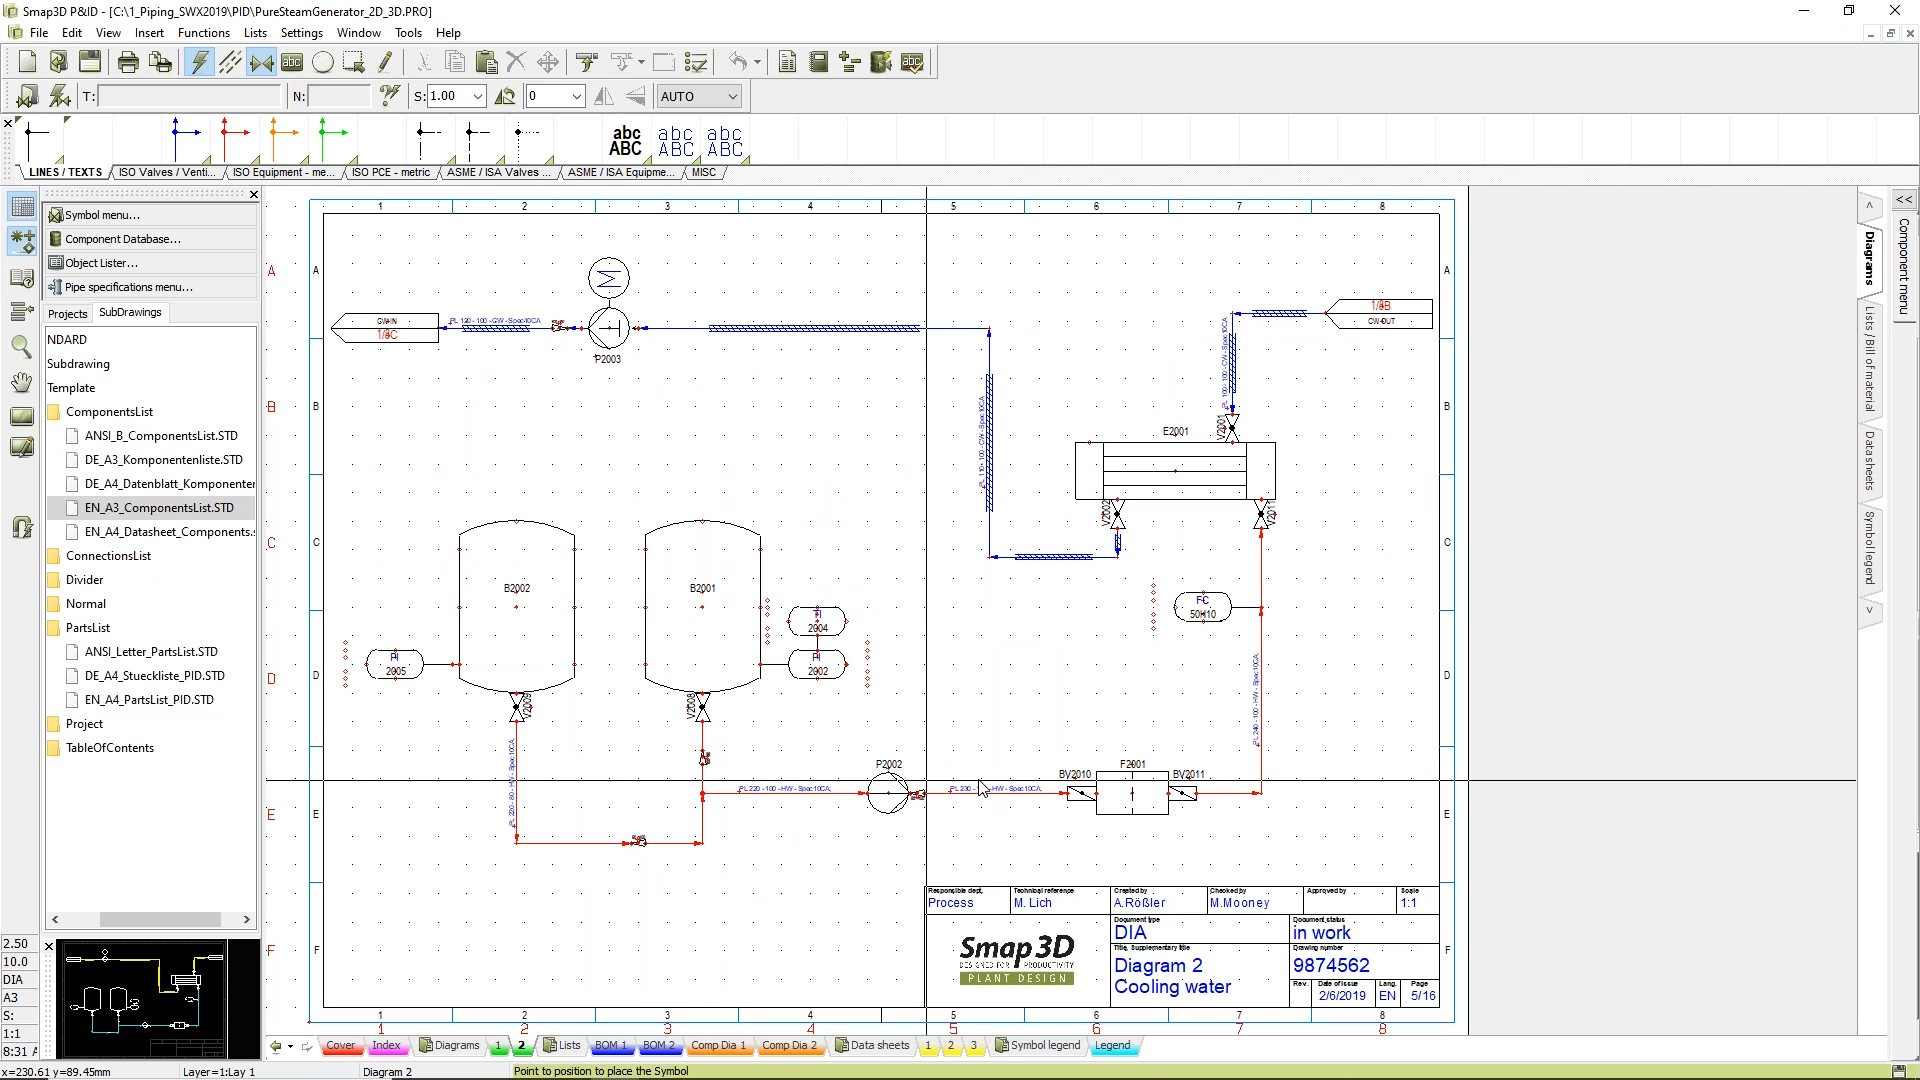 Smap3D Plant Design drawings view